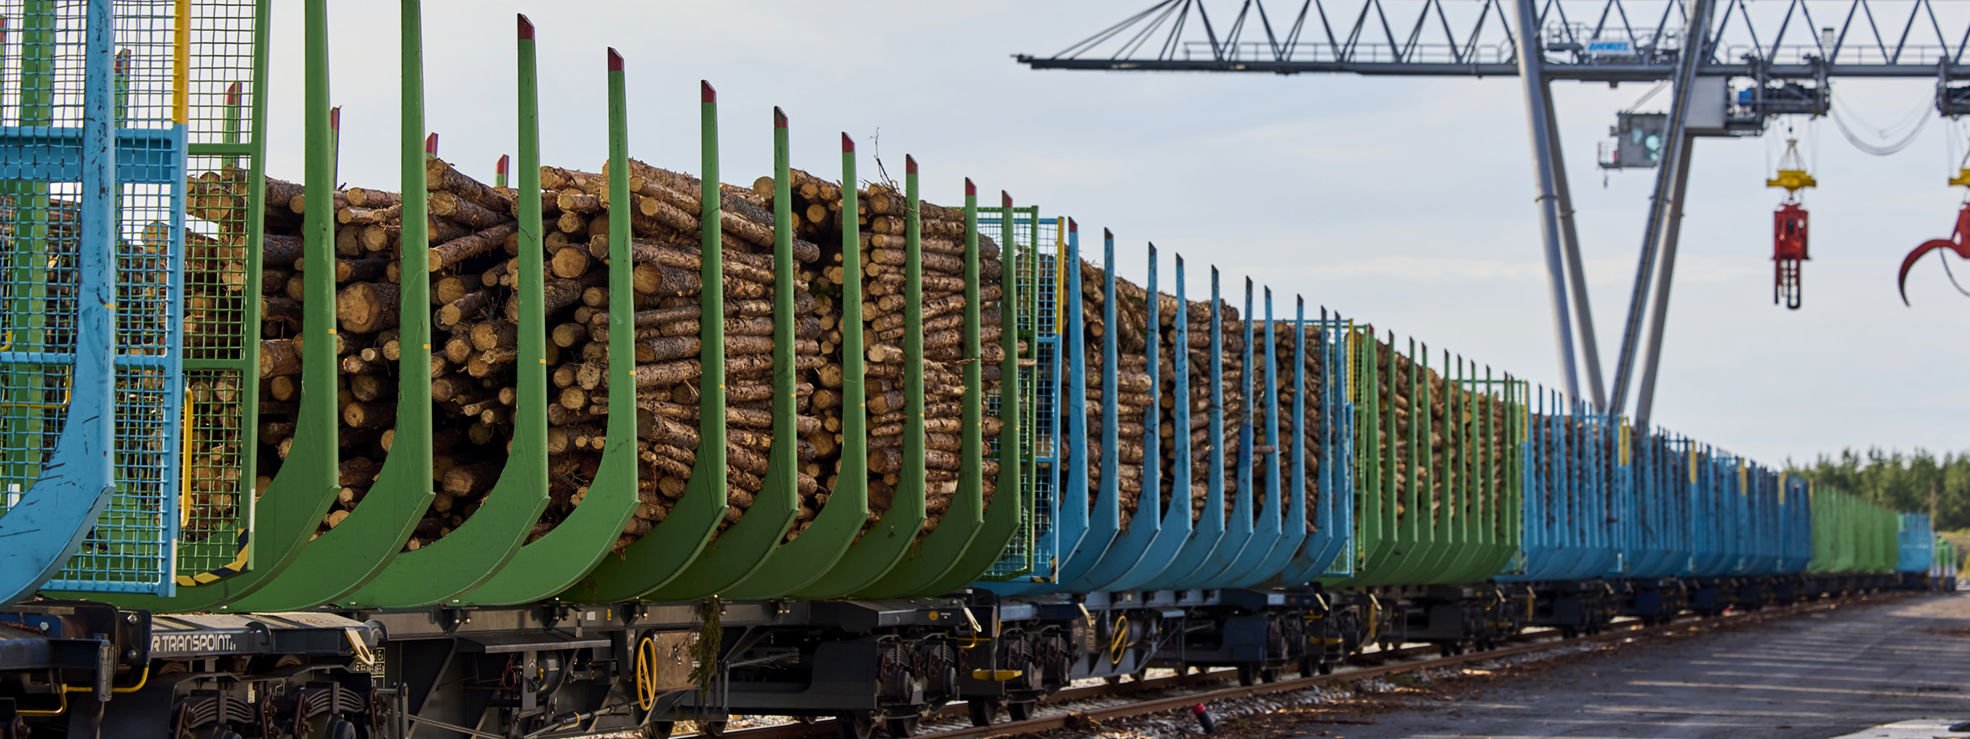 Log train arriving to log yard